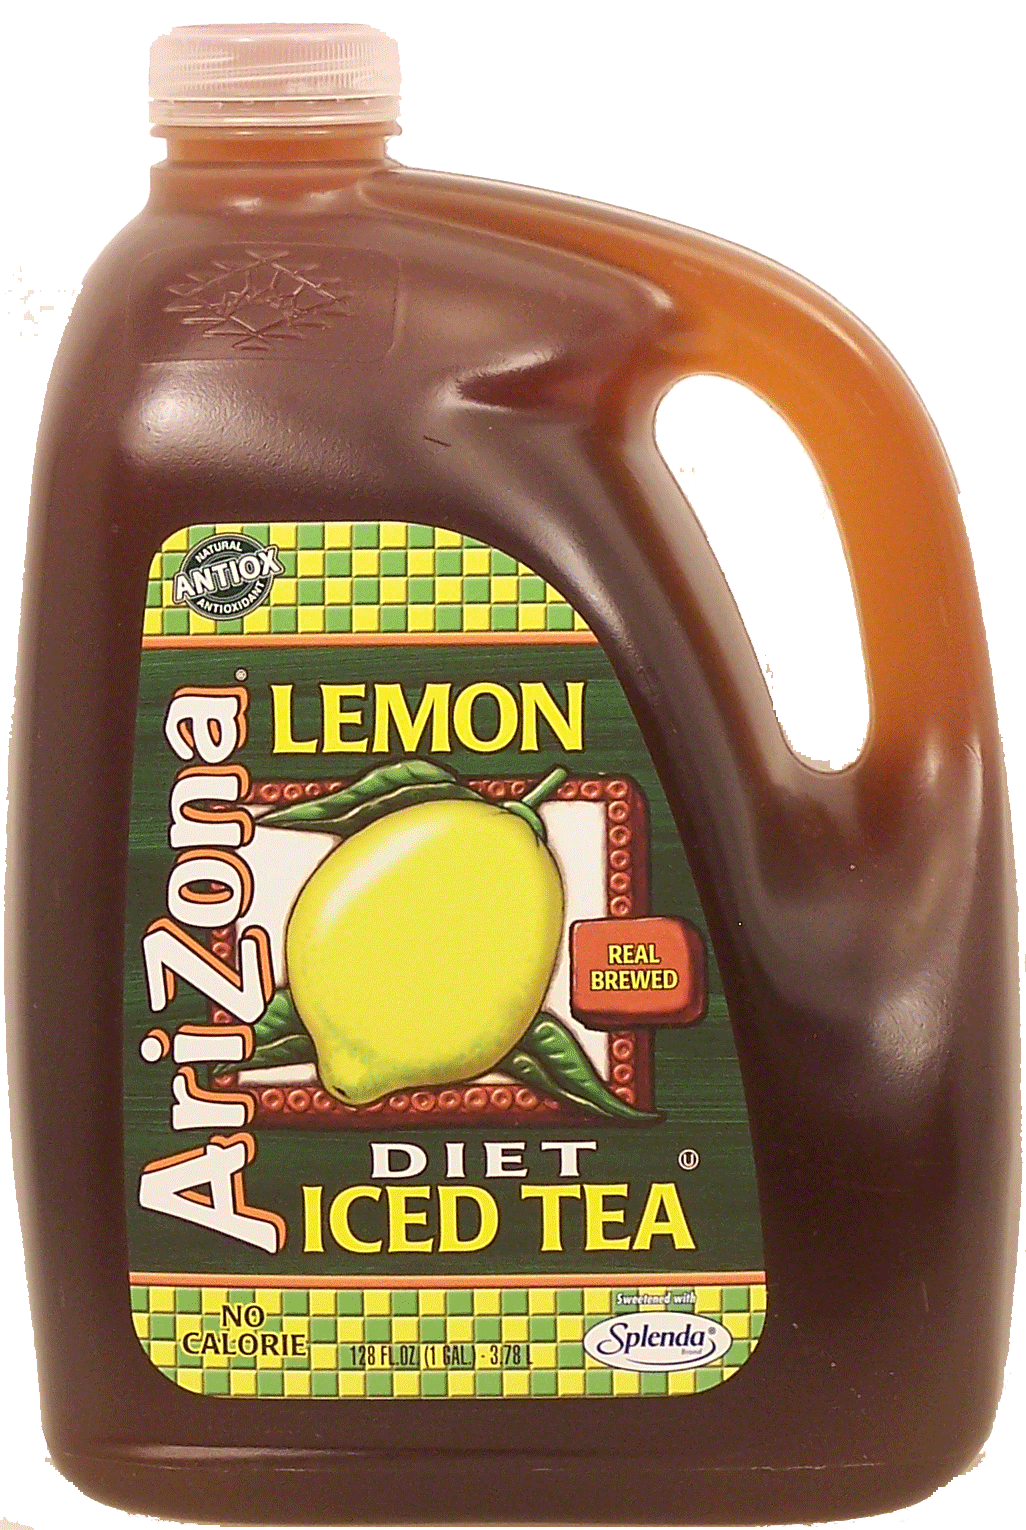 Arizona Zero no calorie iced tea with lemon flavor Full-Size Picture